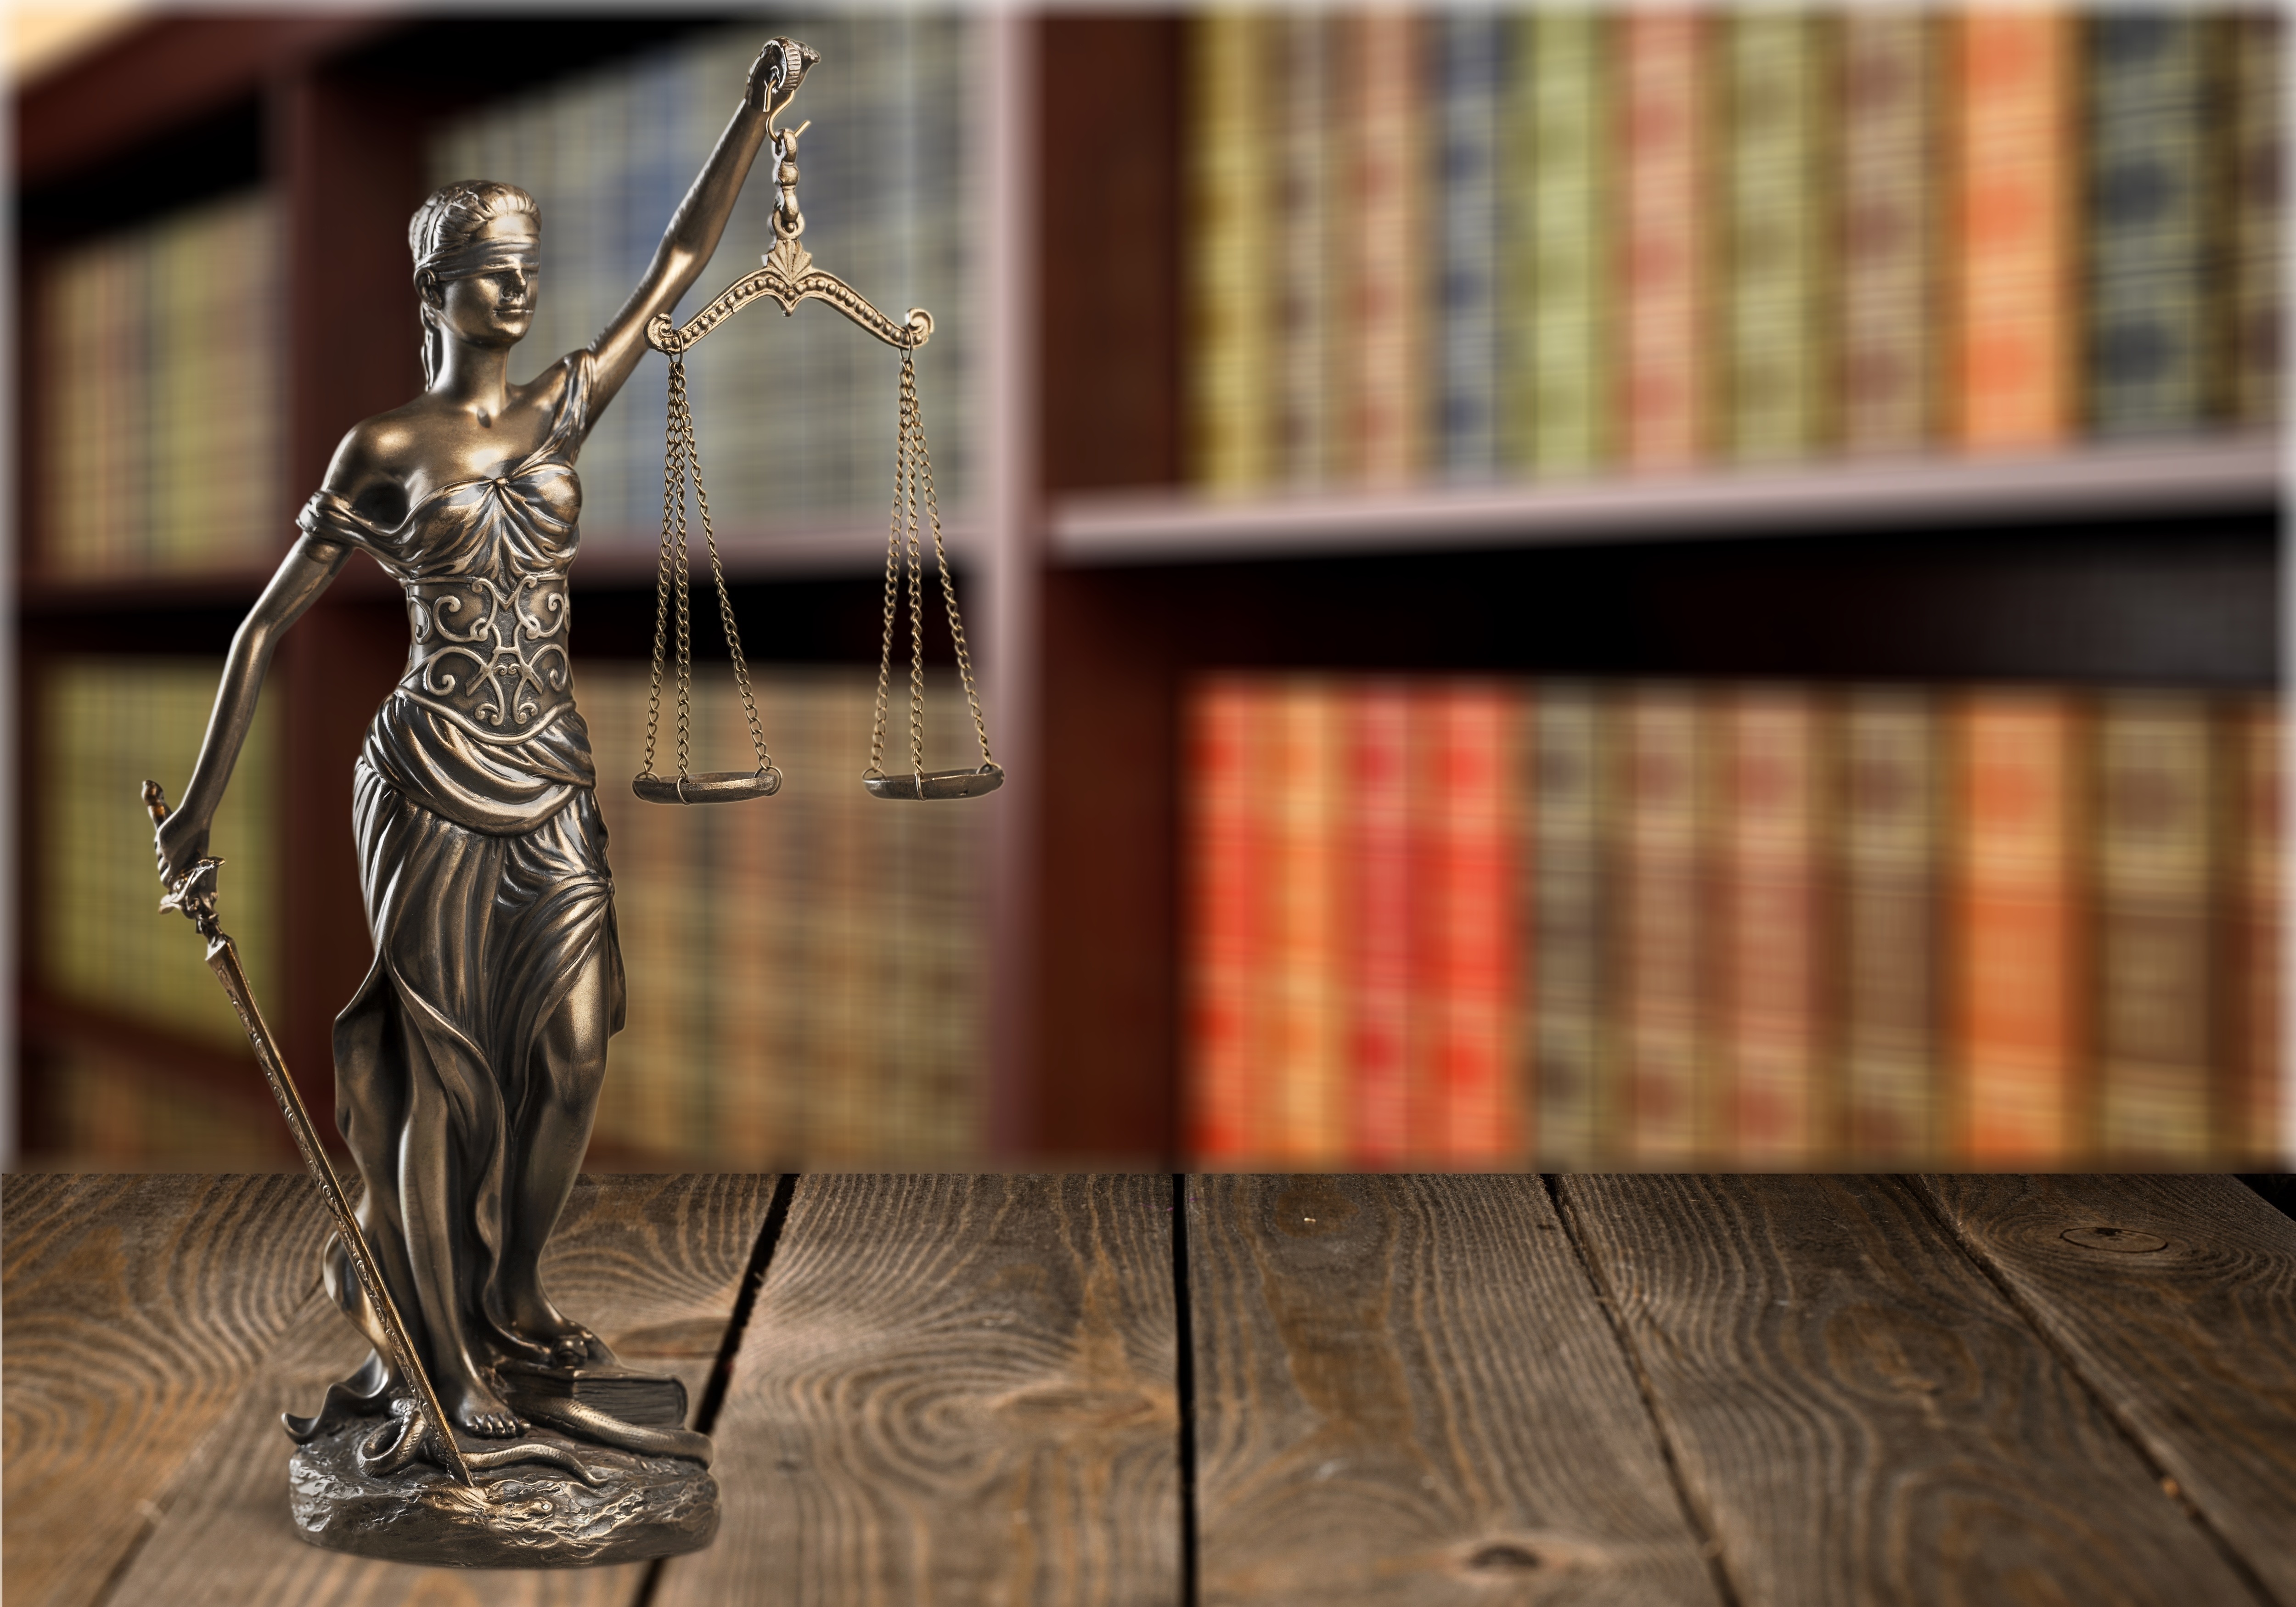 Investor attorneys to press SEC, Congress on RIA arbitrations